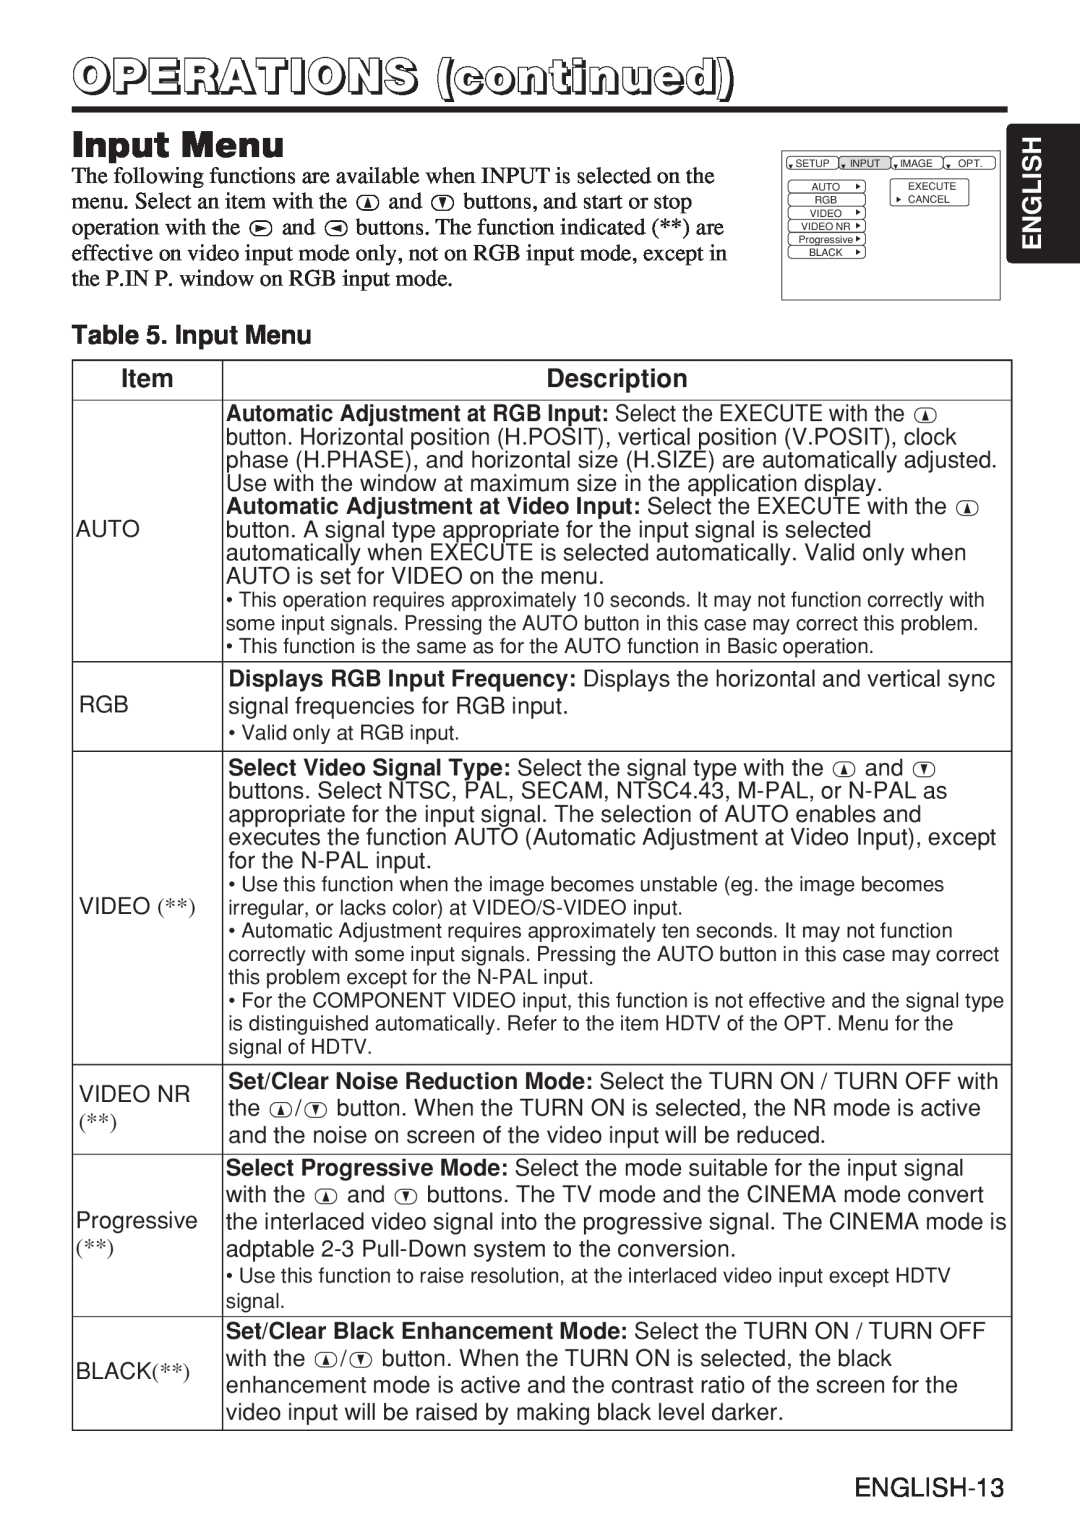 Hitachi CP-X985W user manual Input Menu, OPERATIONS continued, English, Description 